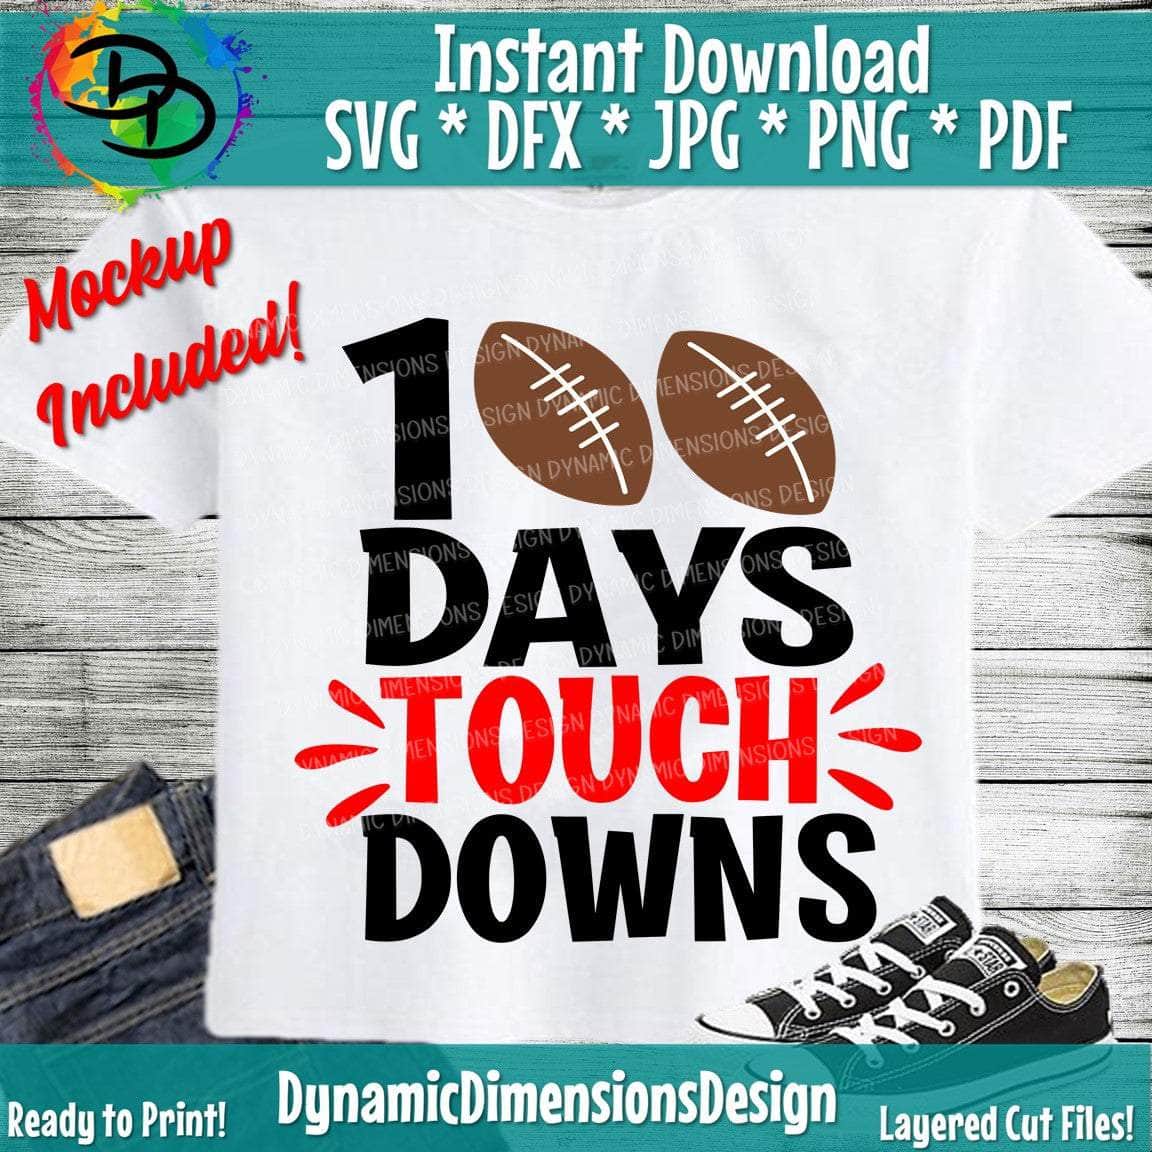 100 Days of Touchdowns